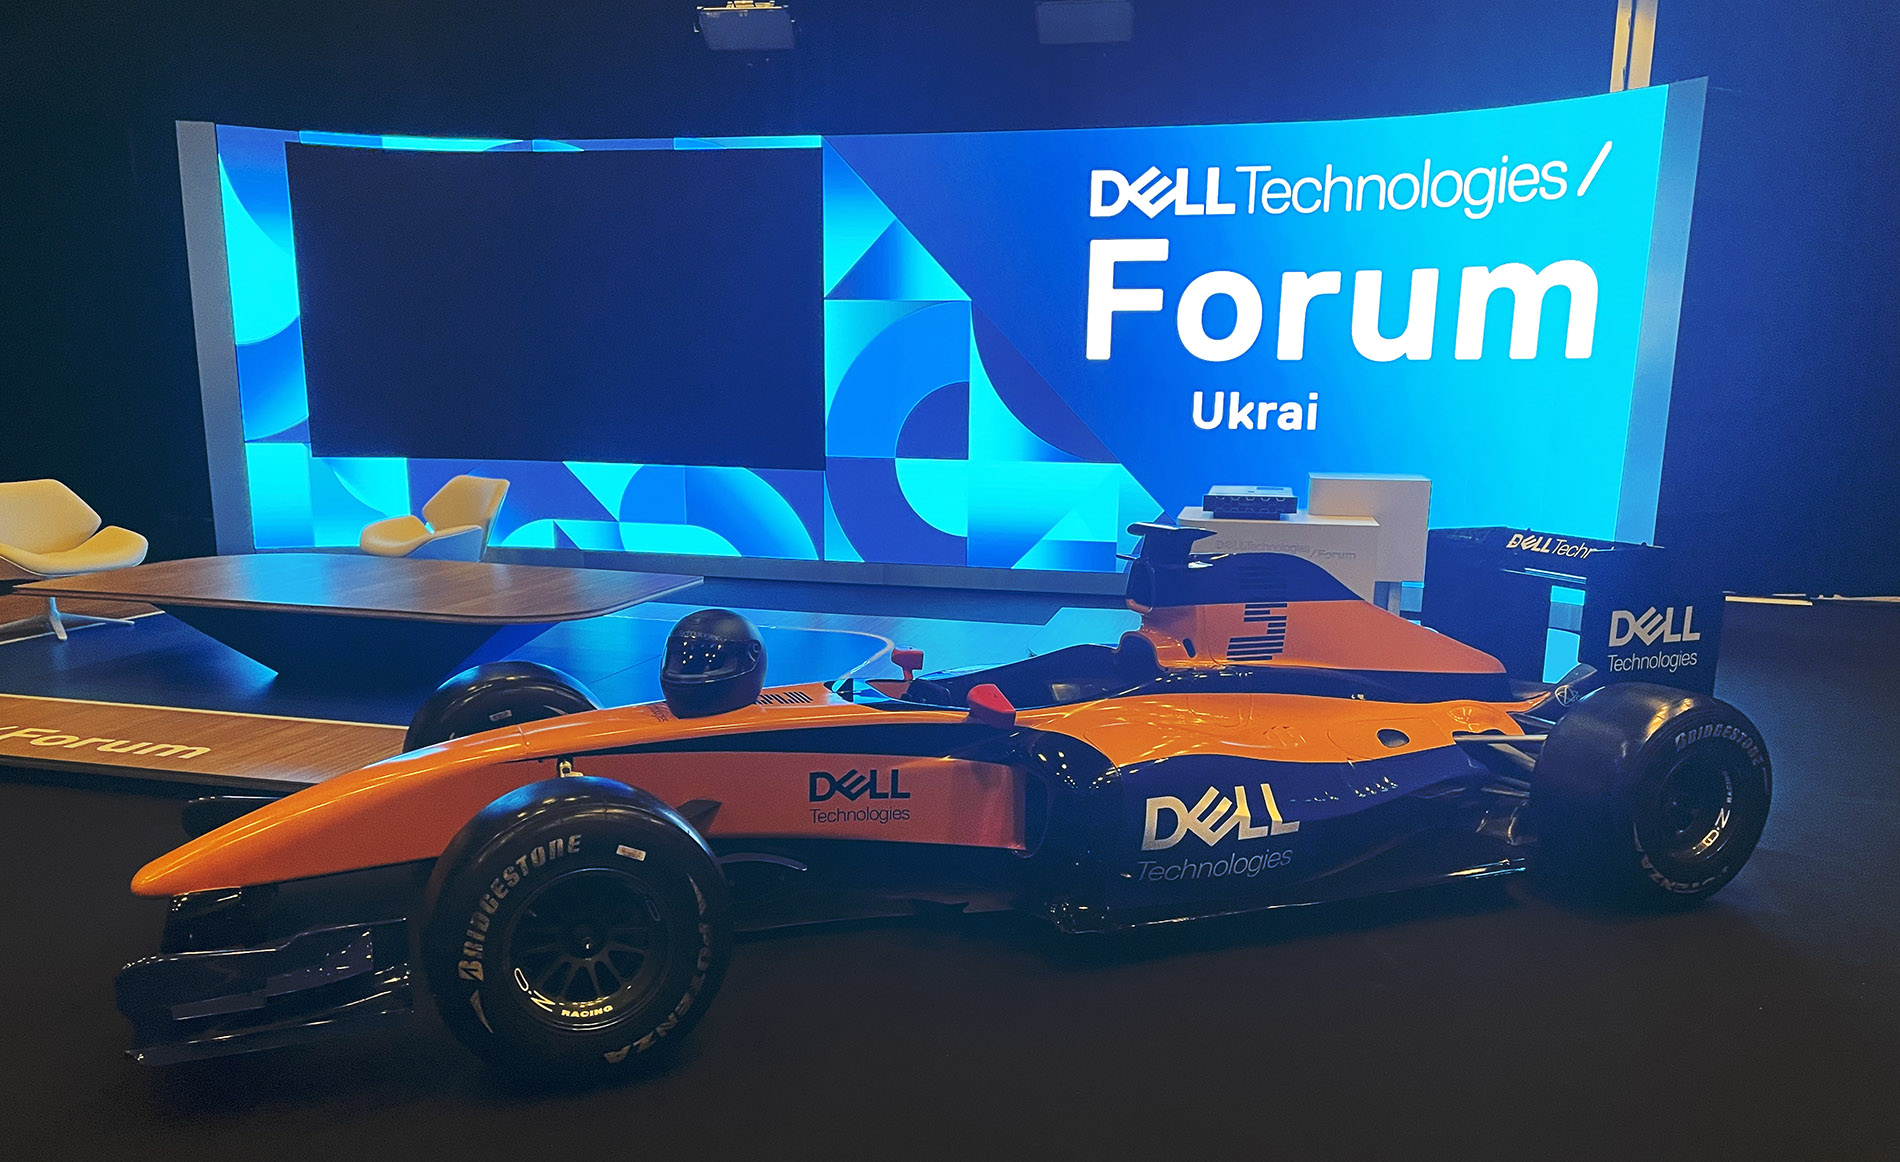 Dell Technologies Forum 2021 - projekt i branding show car F1